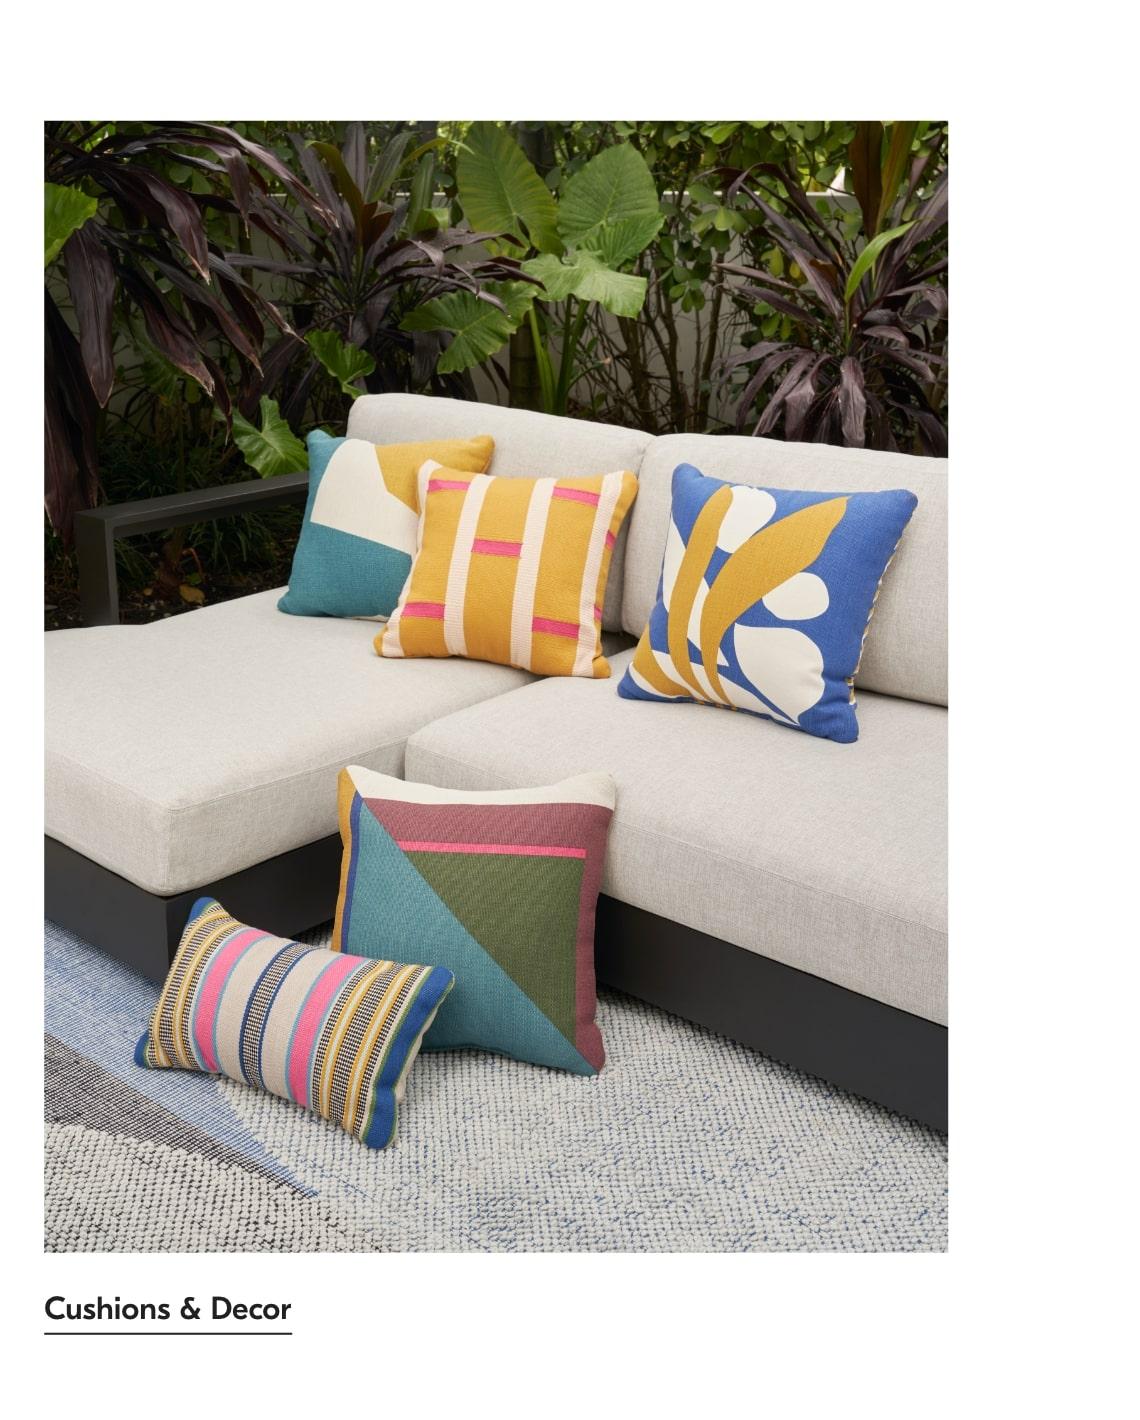 garden cushions & decor 